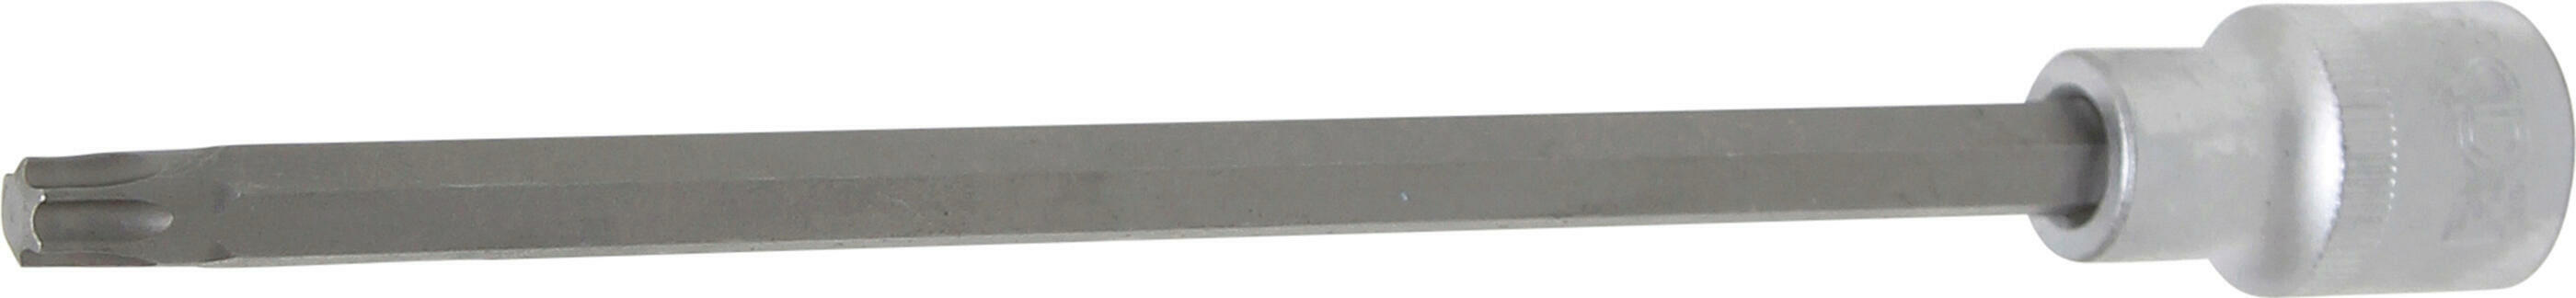 Bit-Einsatz | Länge 200 mm | Antrieb Innenvierkant 12,5 mm (1/2") | T-Profil (für Torx) T45